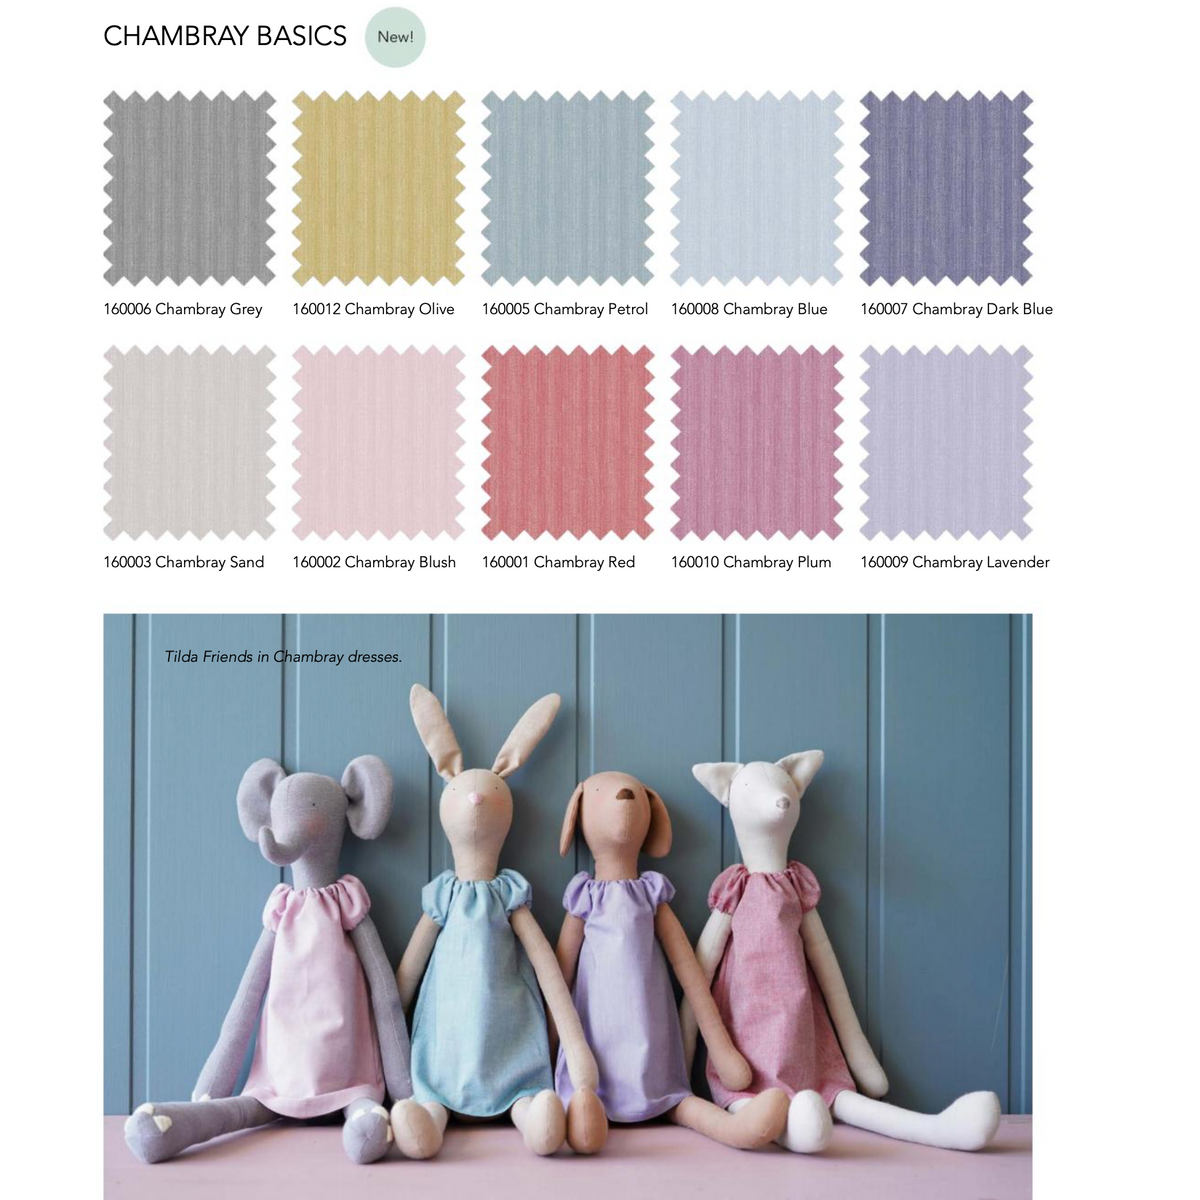 Precision Precut Fabric Hexies, Tilda Meadow Basics Collection 84 pc, –  Serendipity Woods